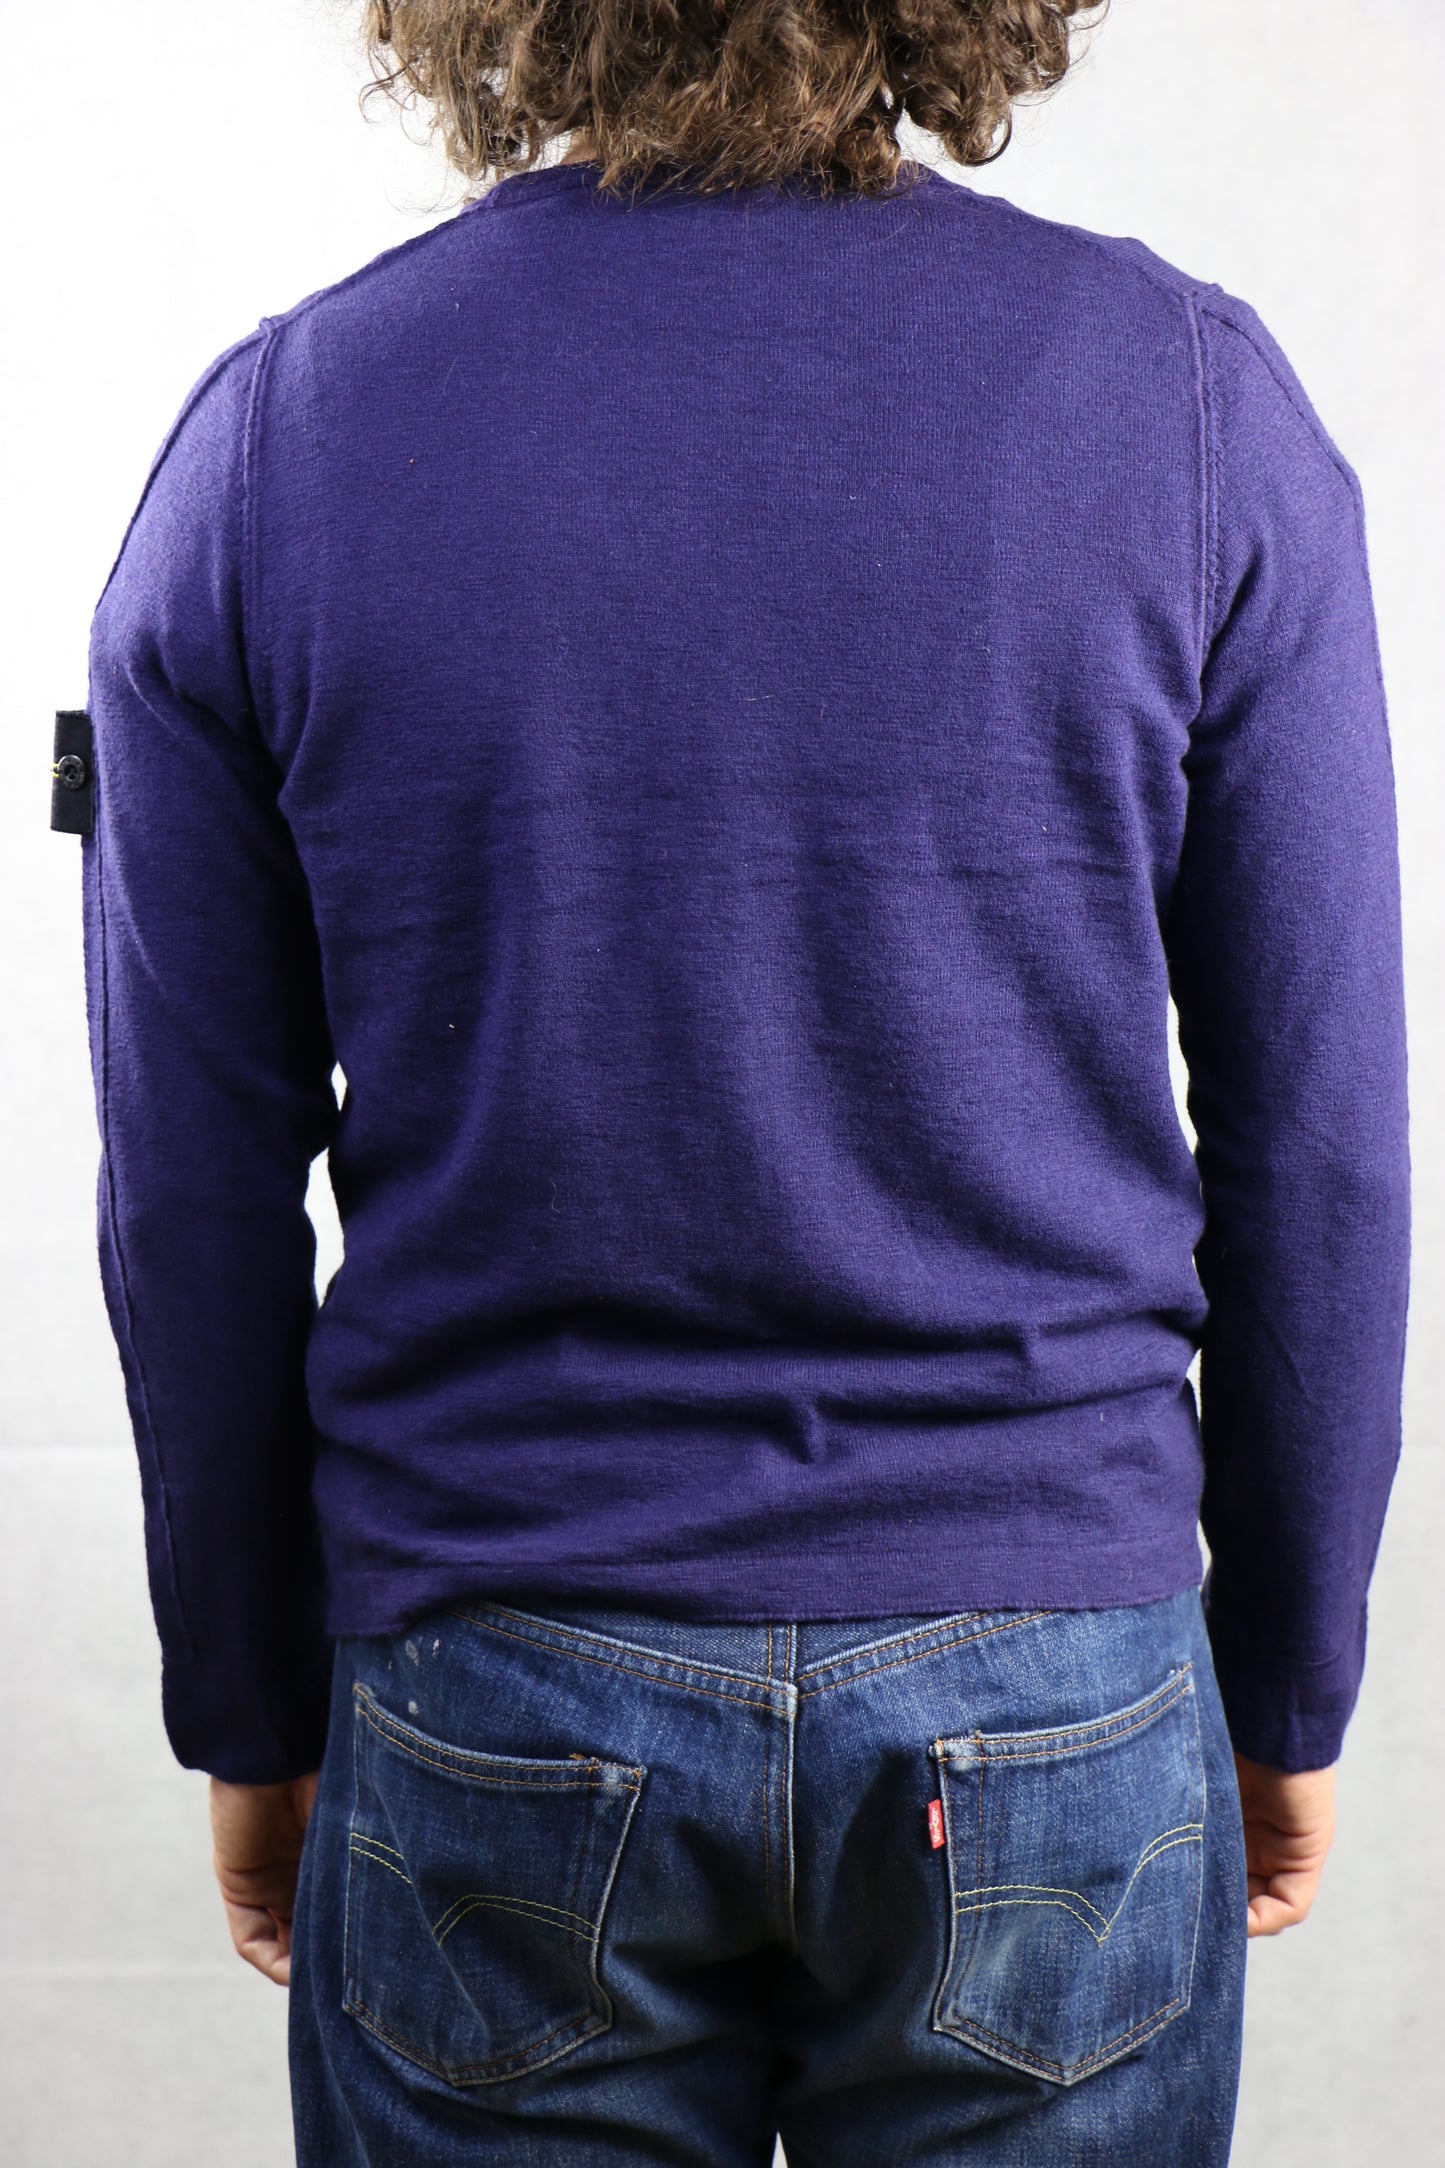 Stone Island Purple Sweater - vintage clothing clochard92.com